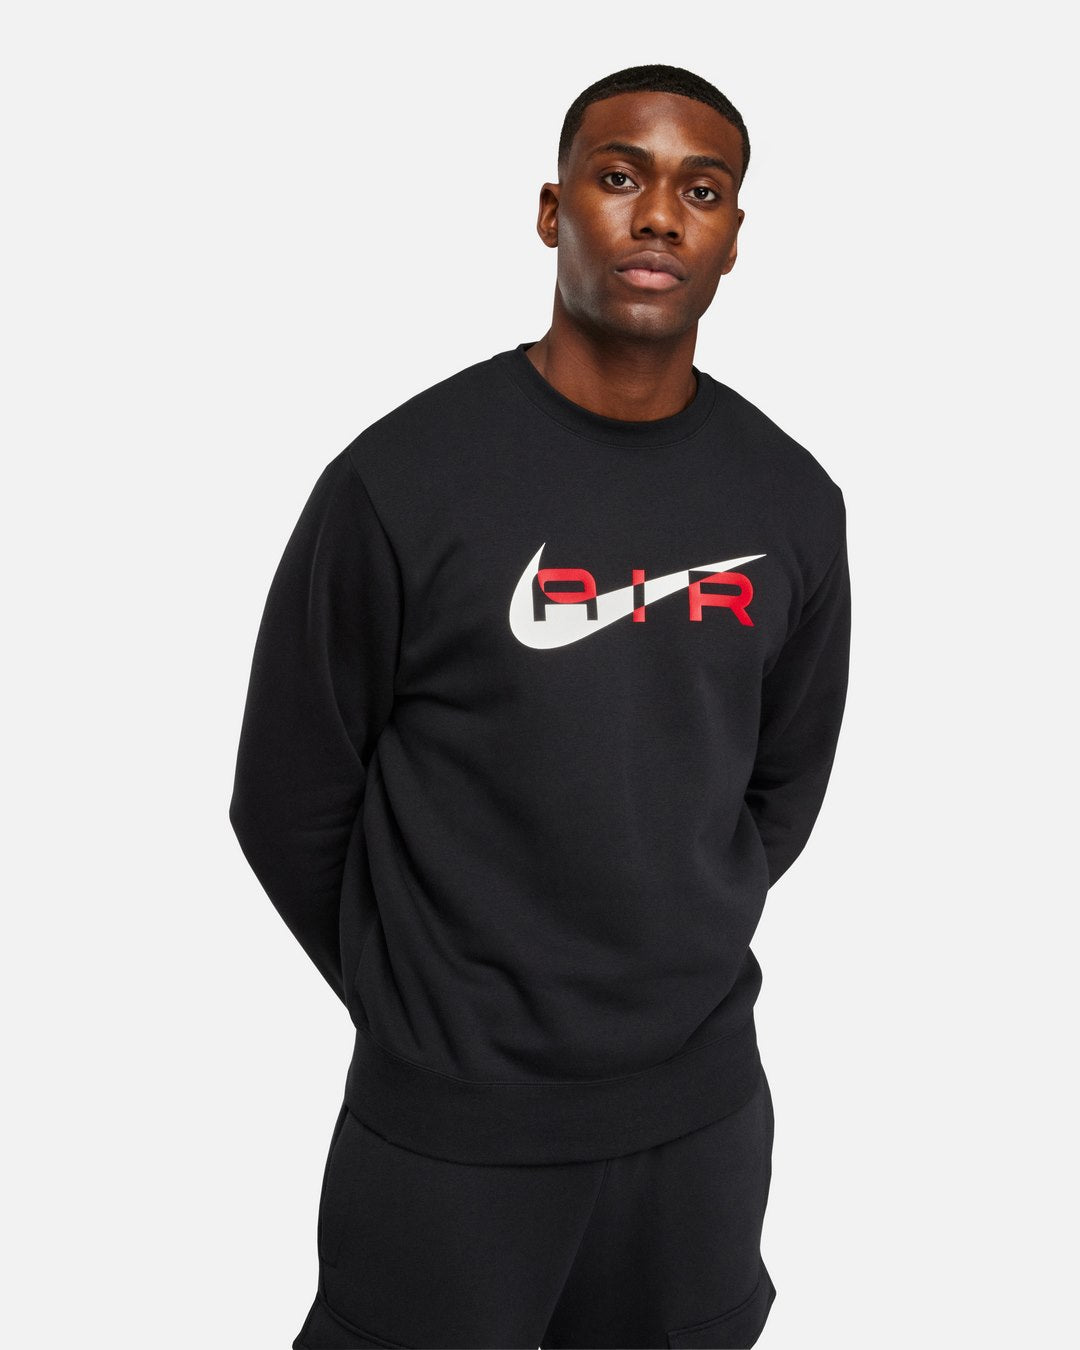 Nike Air Sweatshirt - Black/White/Red